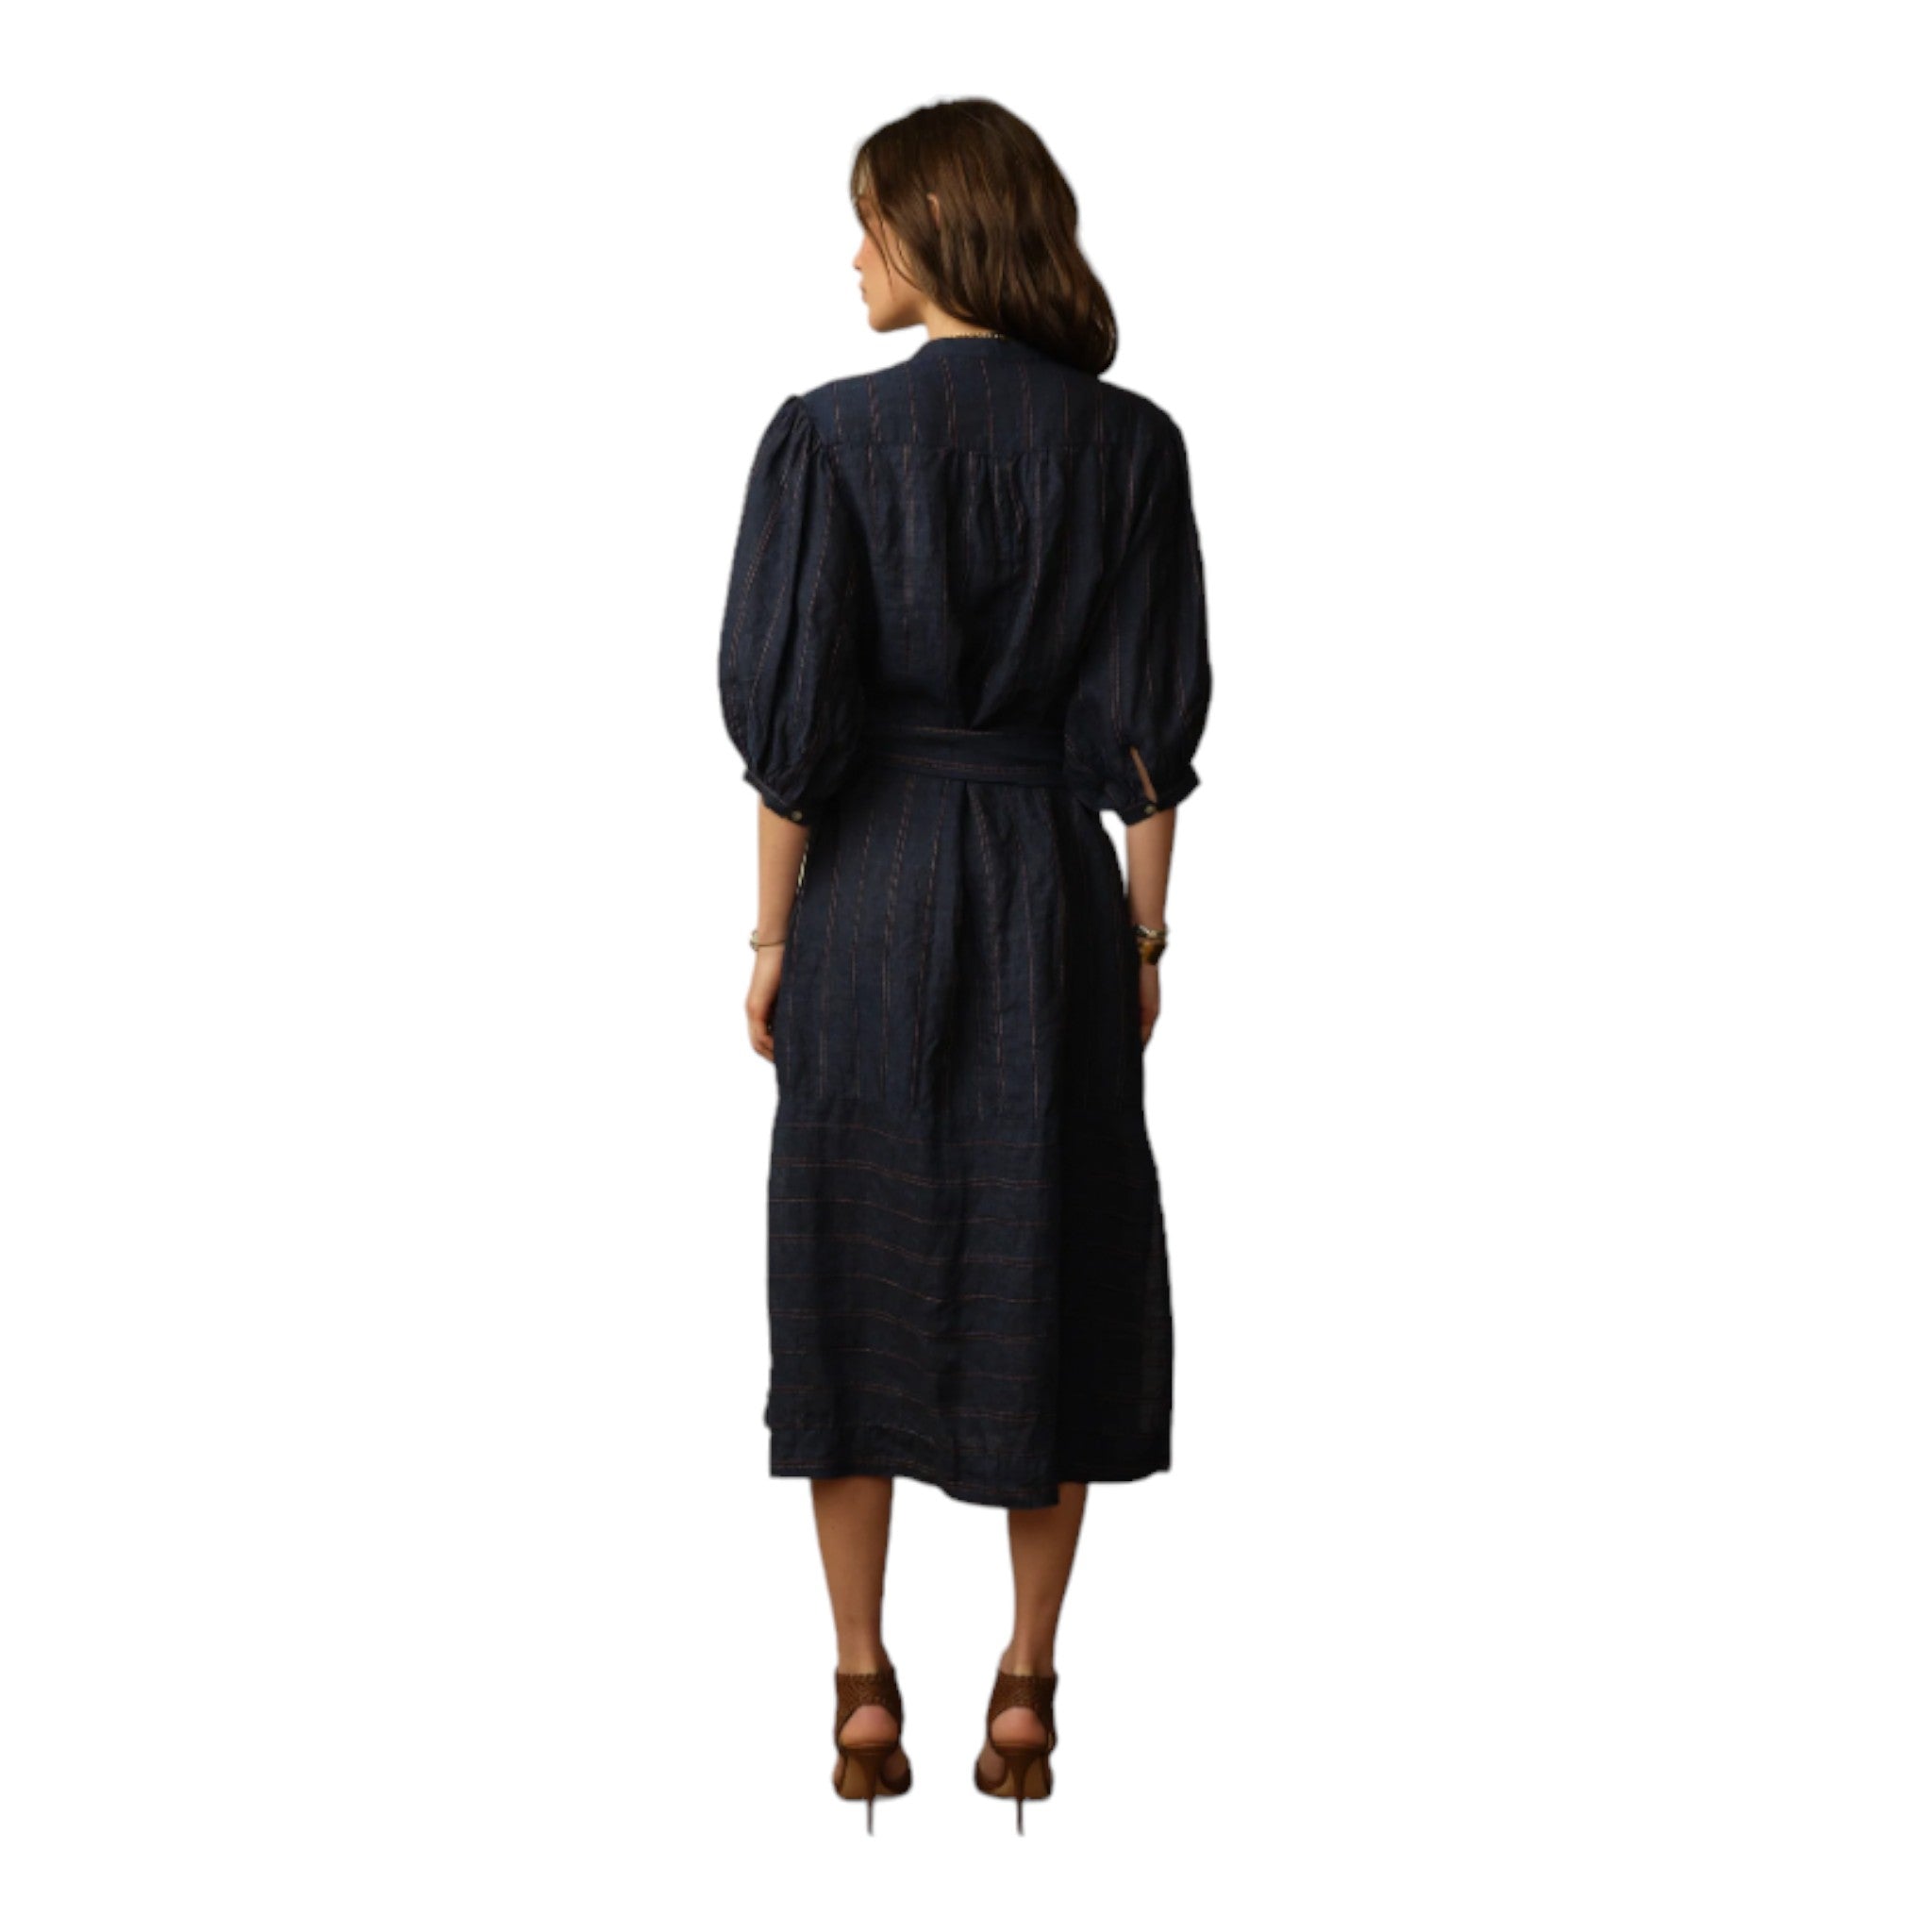 dark denim colored midi linen dress with a v neck, waist tie, 3 quarter puff sleeve and a vertical brown stripe detail